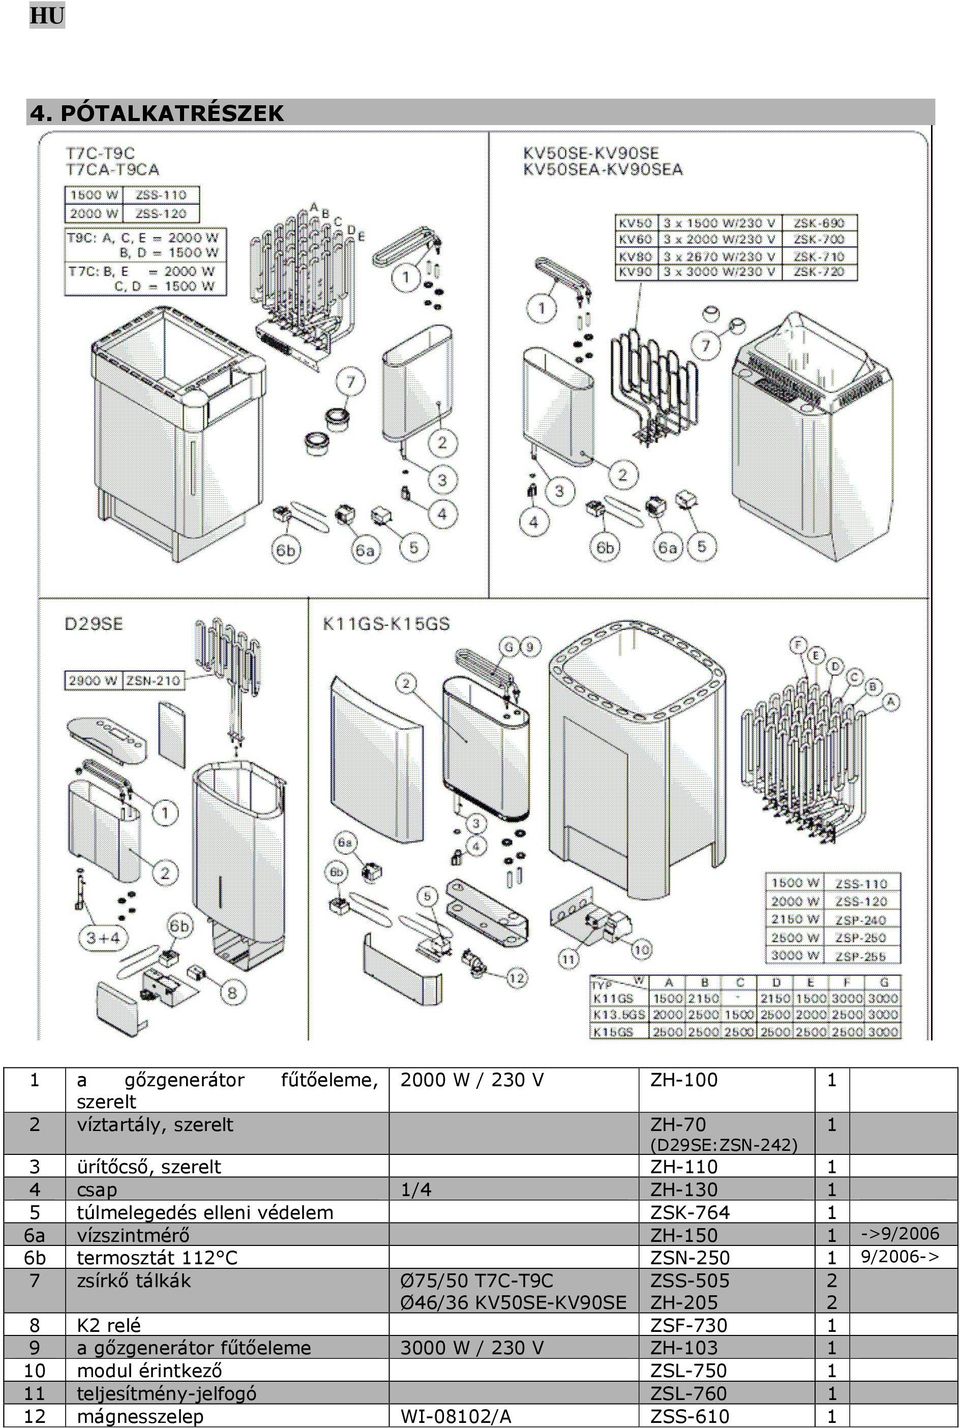 termosztát 112 C ZSN-250 1 9/2006-> 7 zsírkő tálkák Ø75/50 T7C-T9C Ø46/36 KV50SE-KV90SE ZSS-505 ZH-205 2 2 8 K2 relé ZSF-730 1 9 a